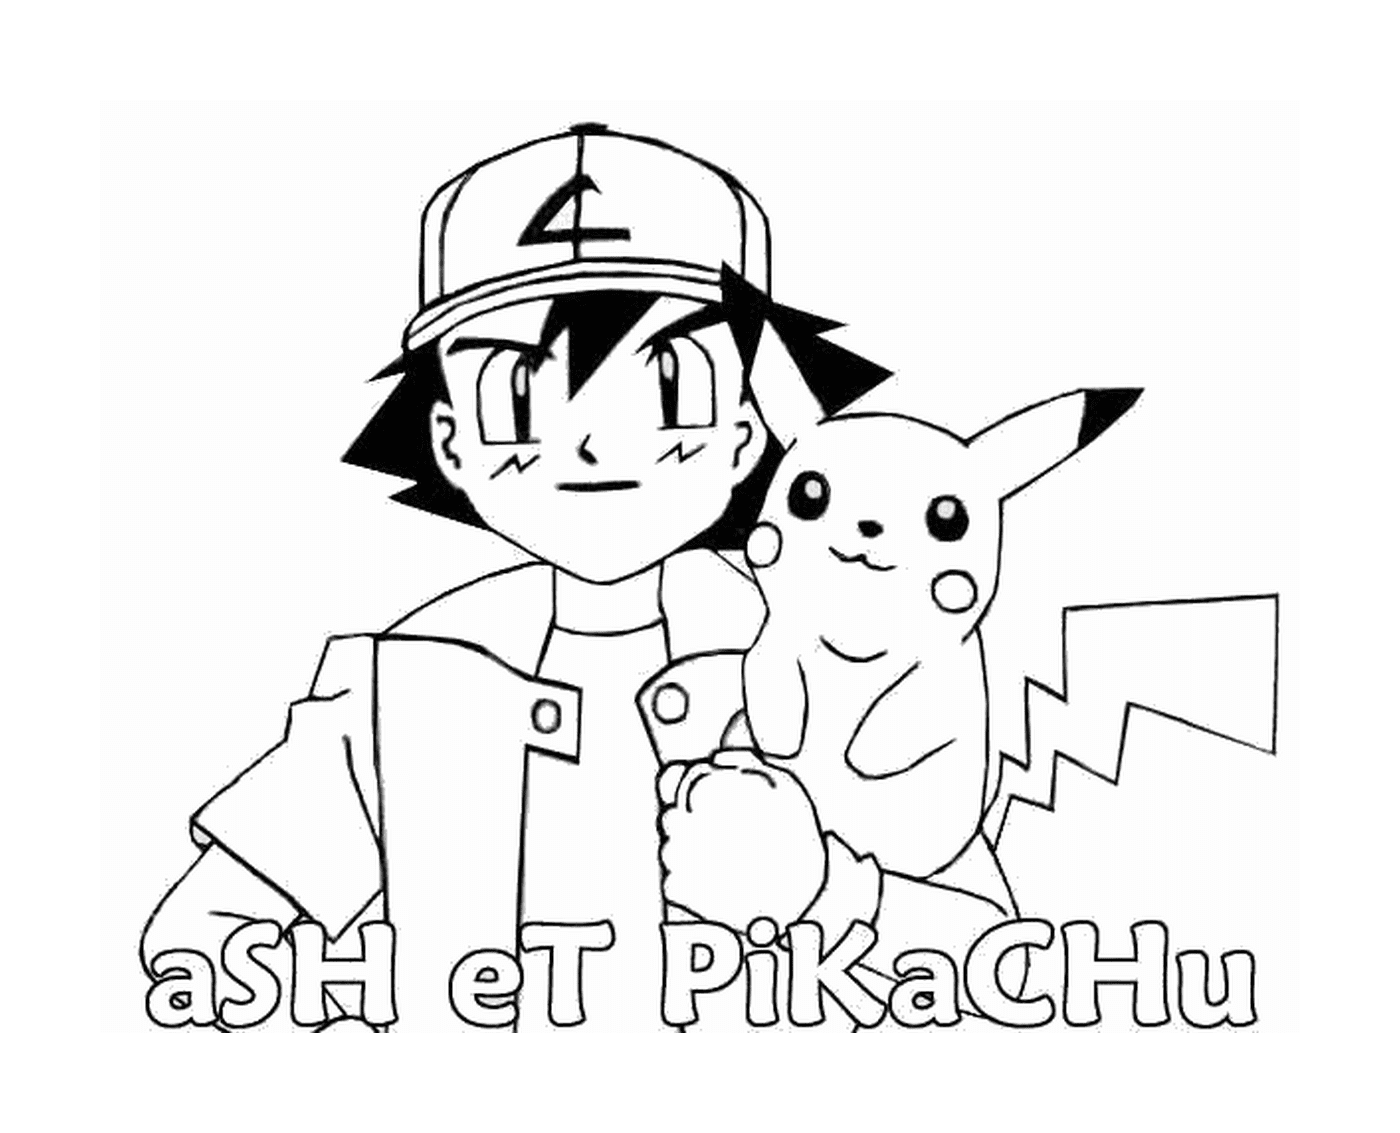  Pokémon Ash hält eine Pikachu Farbe 